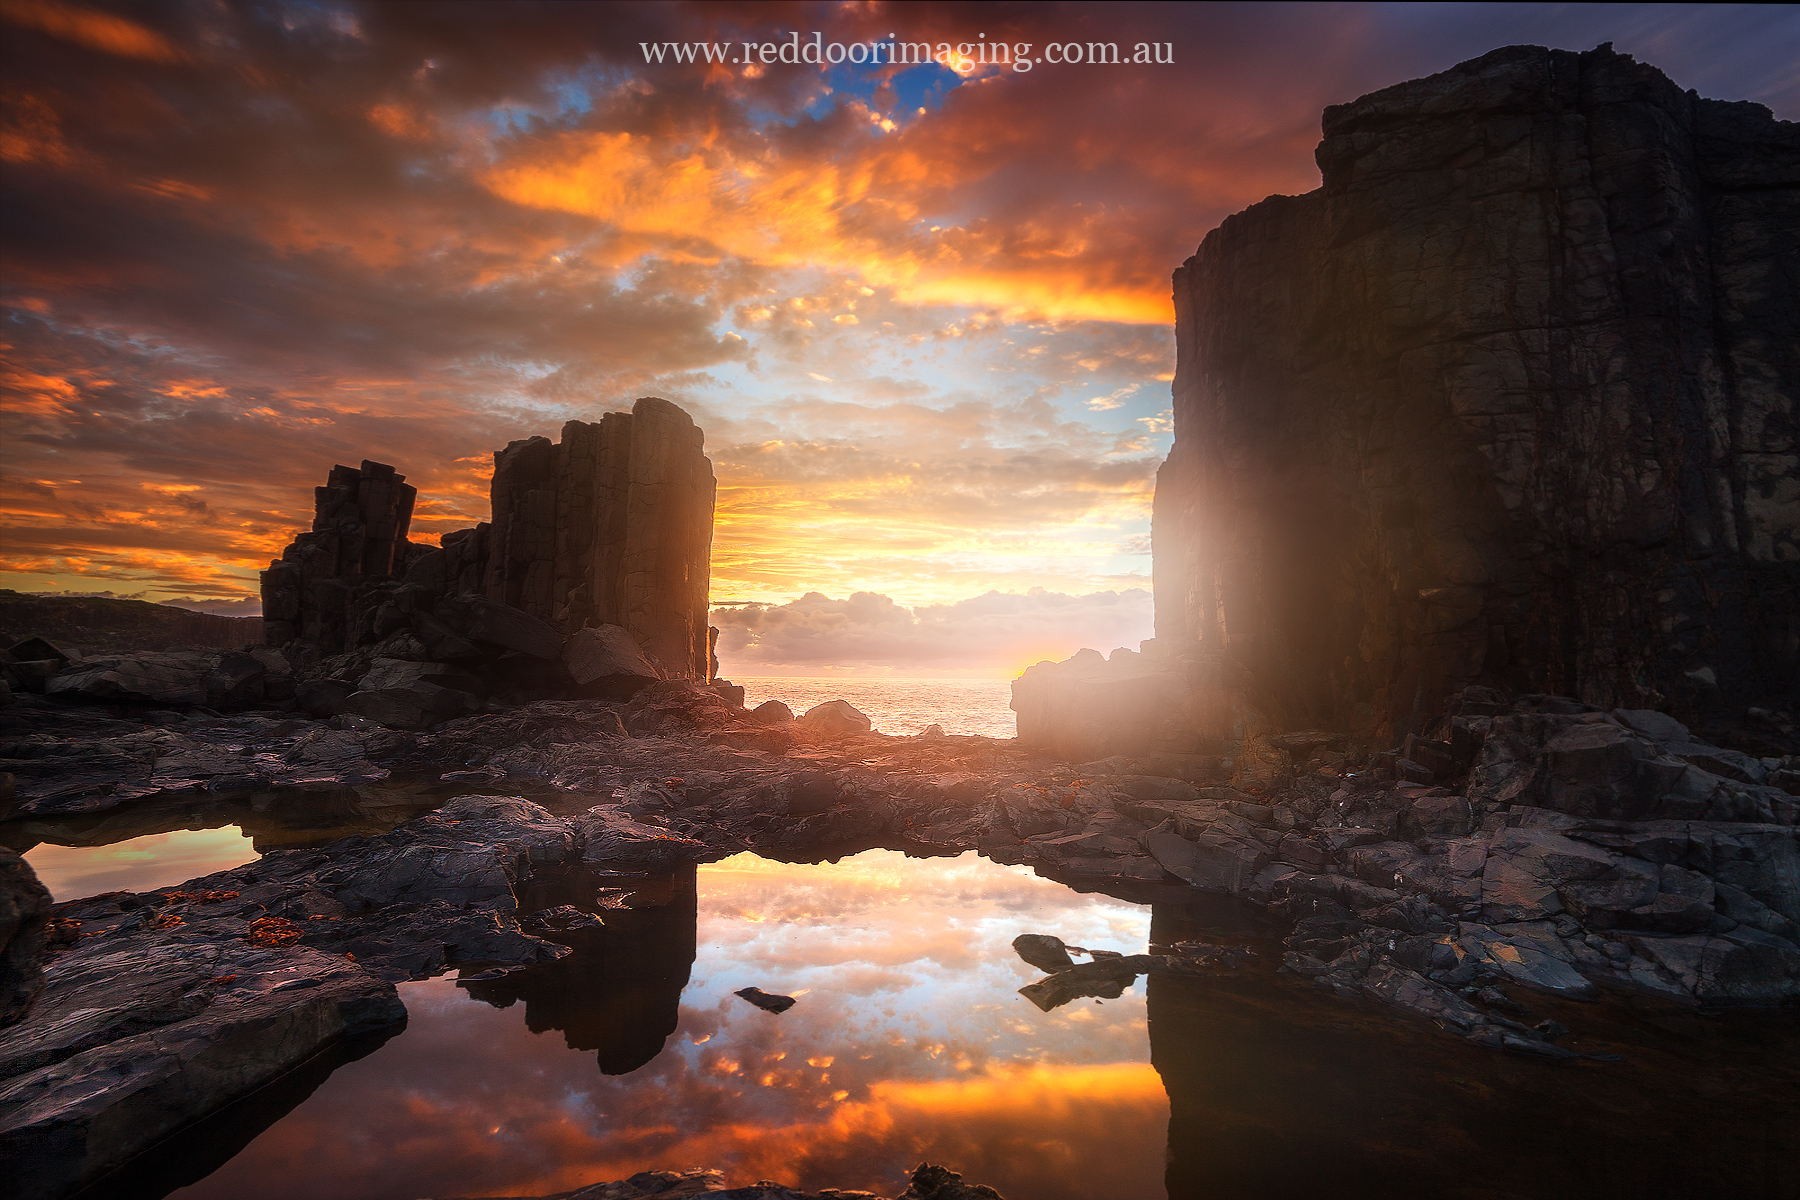 General 1800x1200 landscape rock formation sunset sea Australia nature orange sky sky rocks reflection outdoors